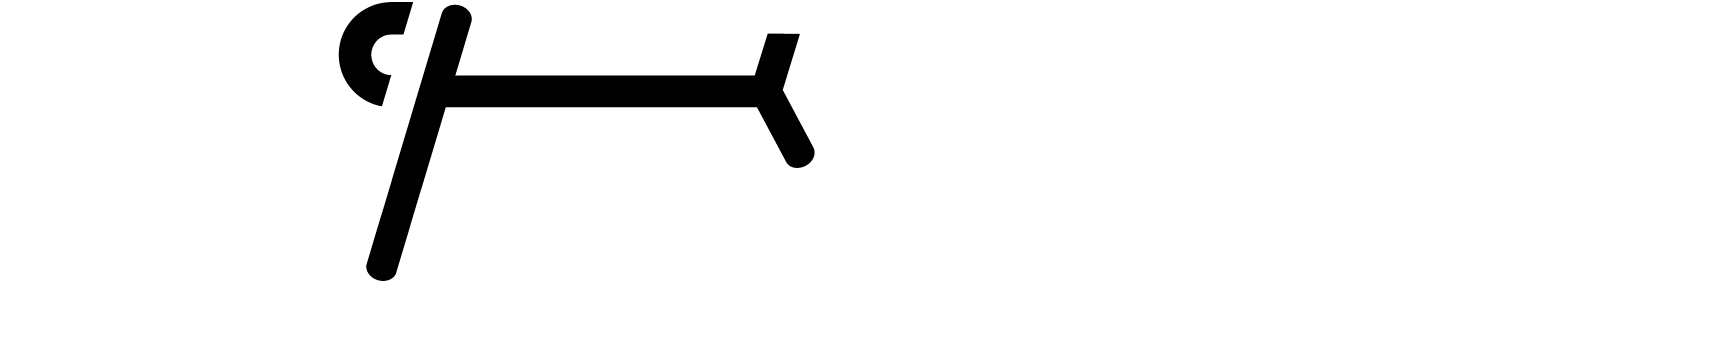 Momentum company logotip